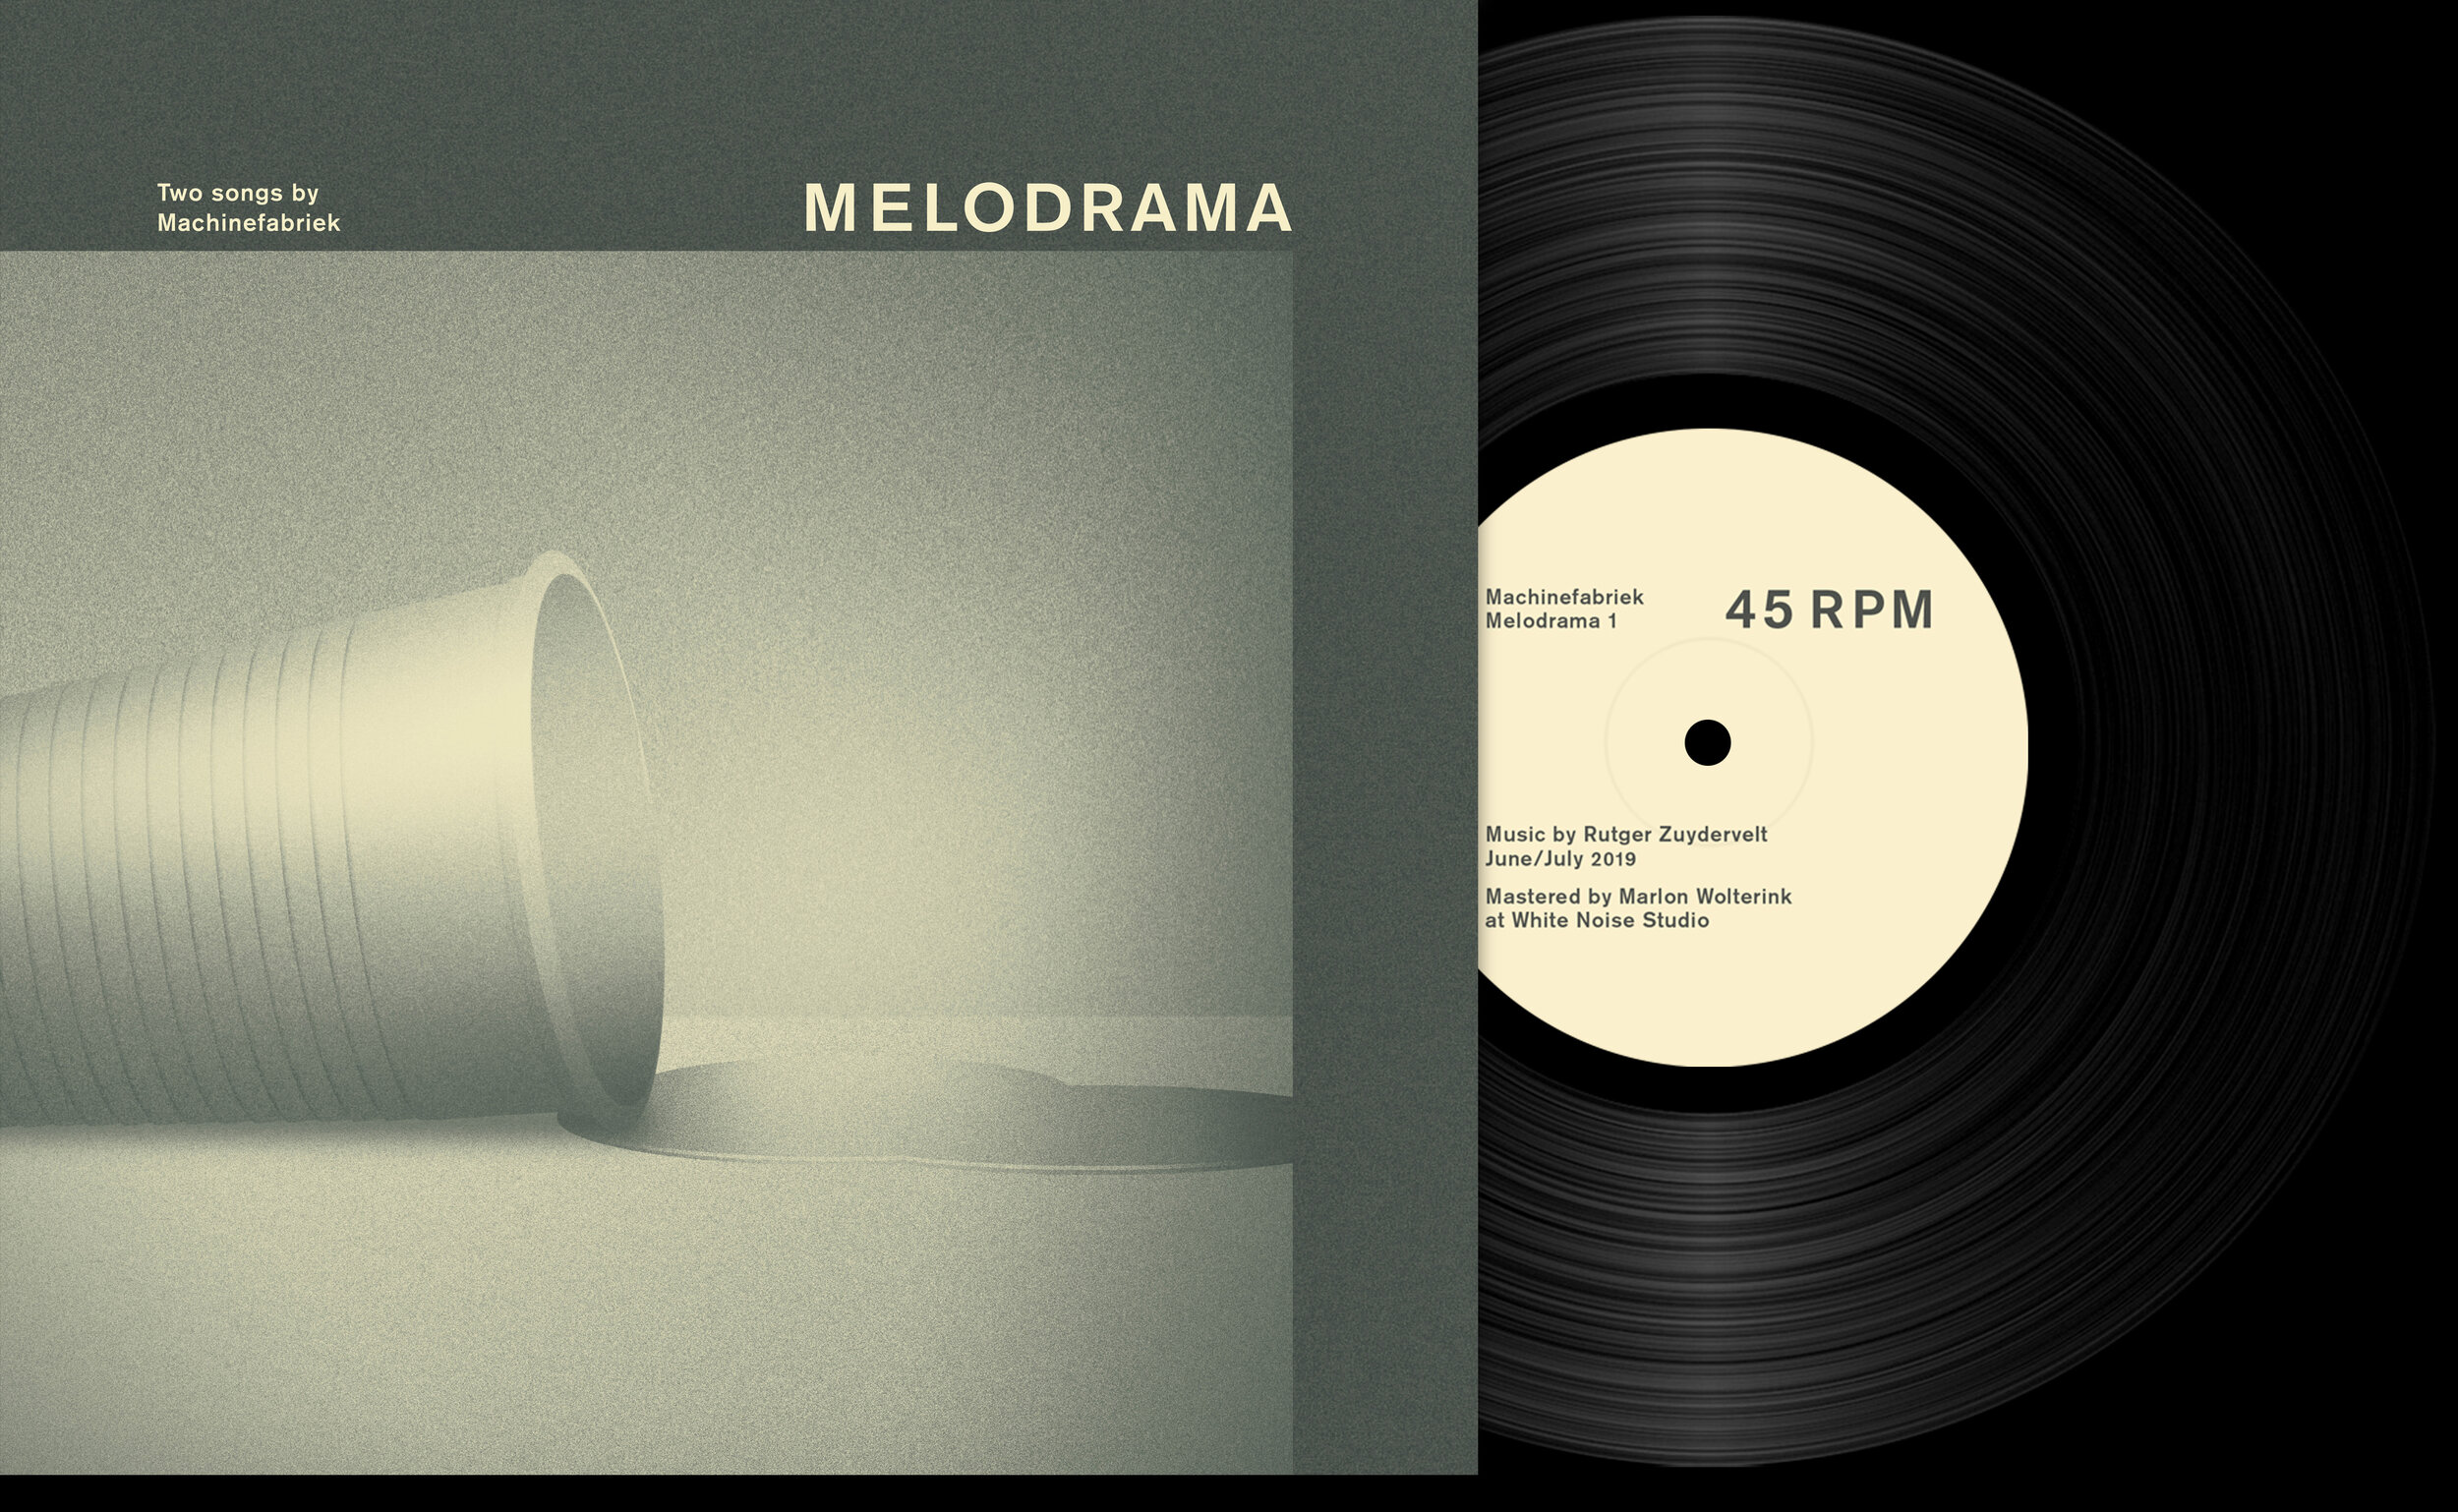  7-inch front cover – Machinefabriek Melodrama Champion Version, 2019 